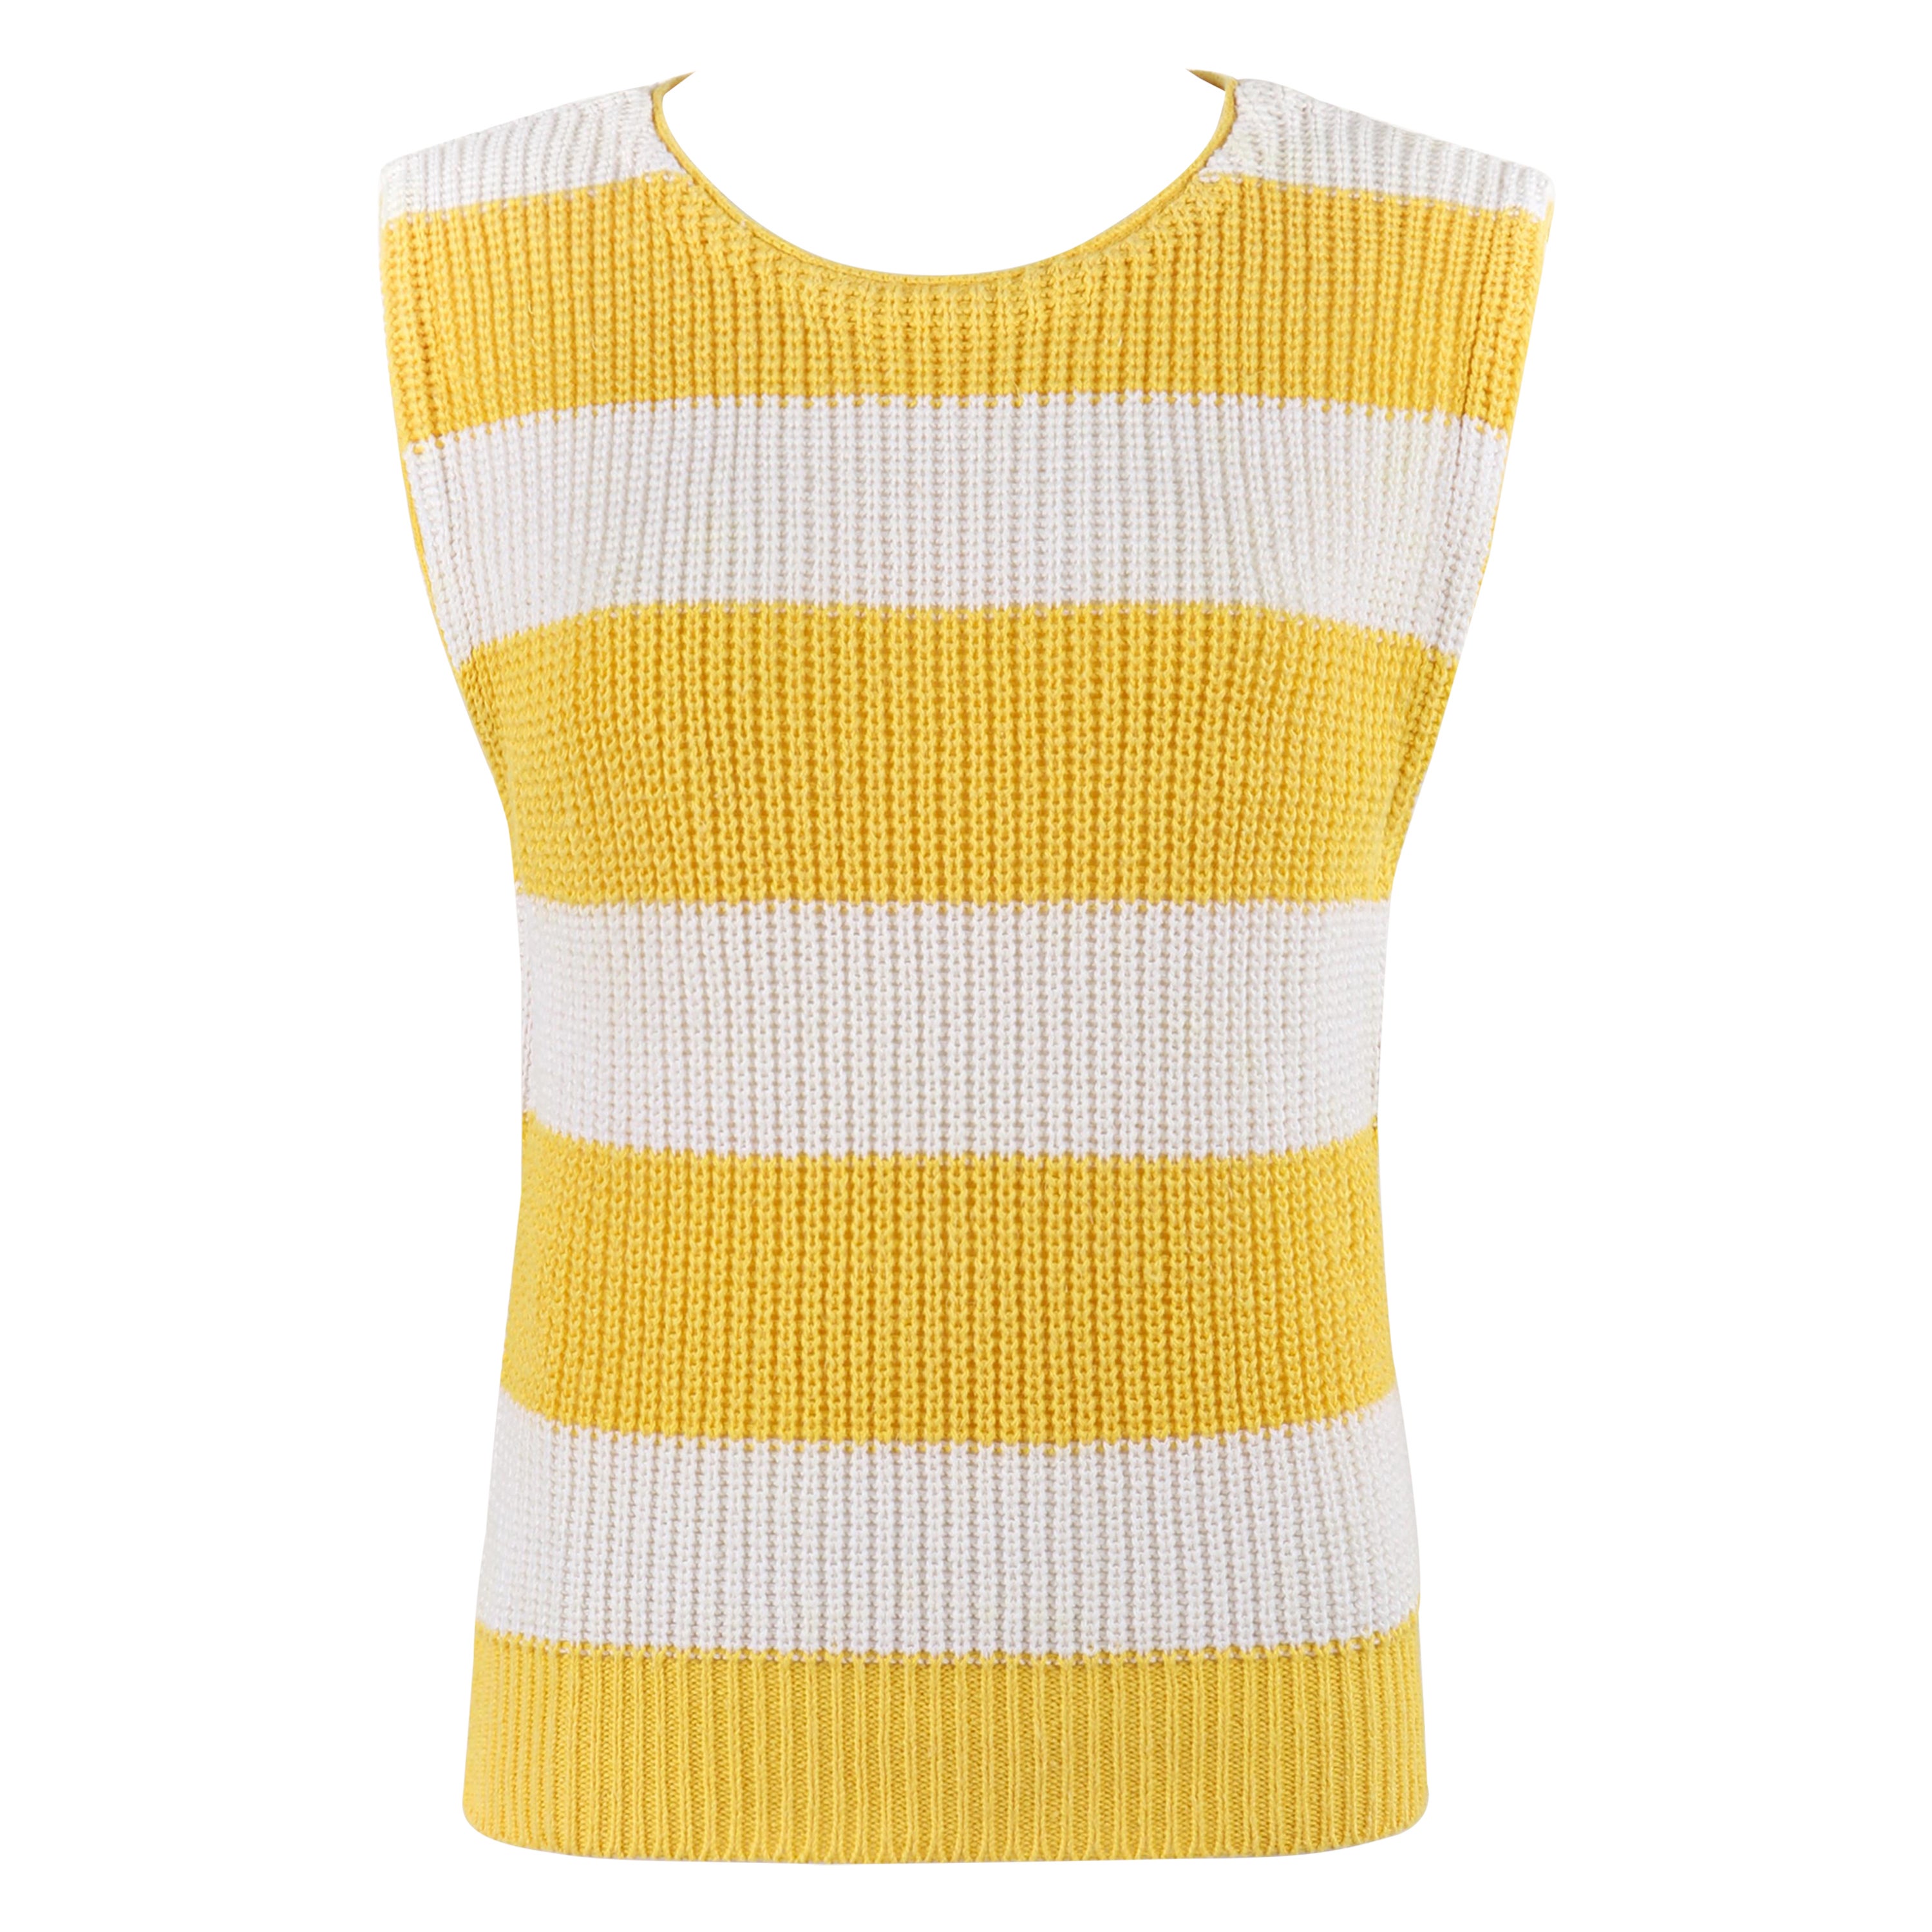 DIANE VON FURSTENBERG c.1980s Yellow White Striped Knit Sleeveless Sweater Top For Sale